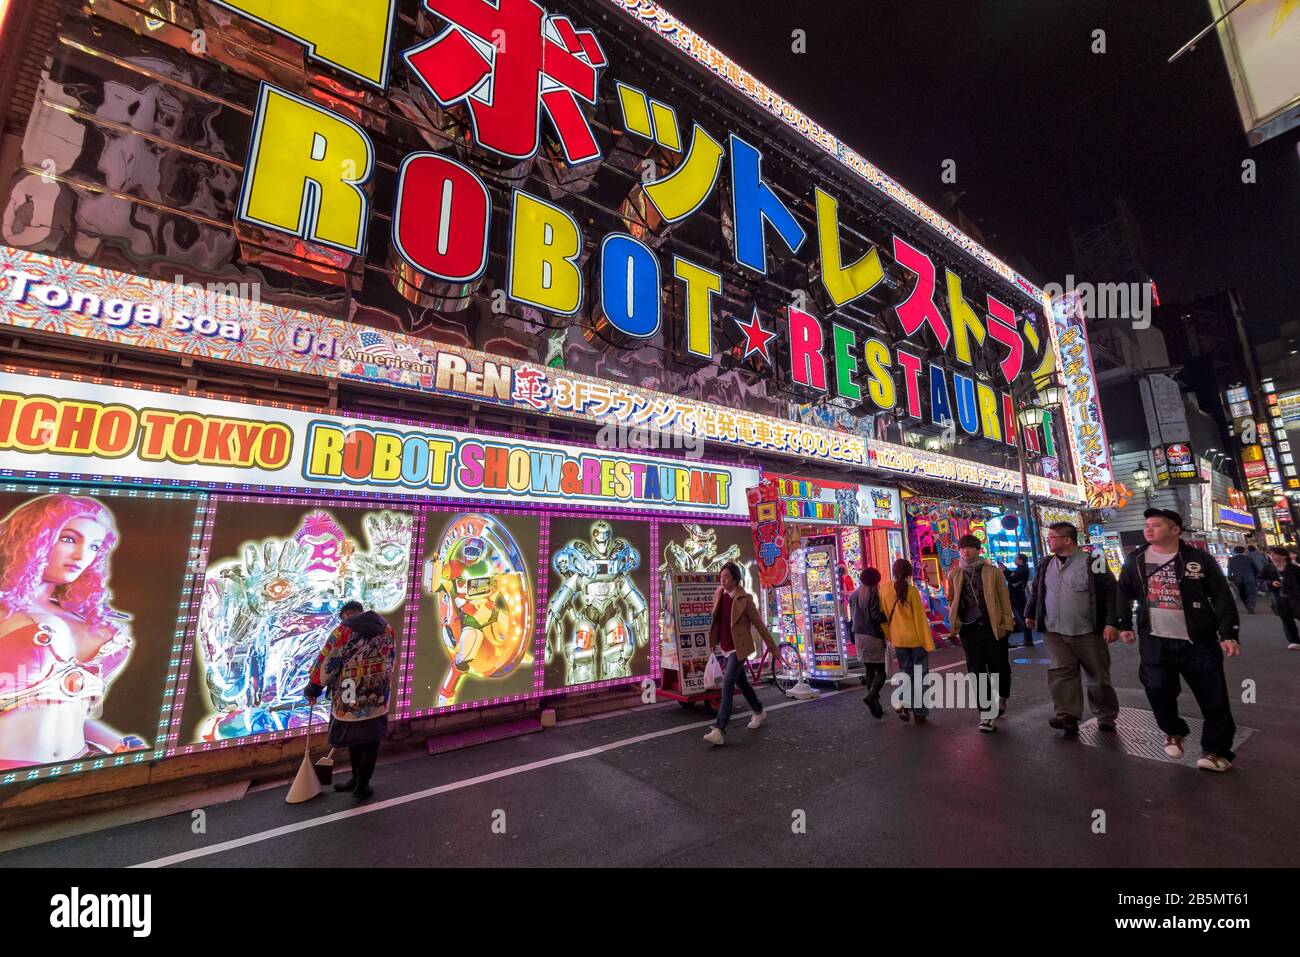 Tourists at night outside the Robot Restaurant, Kubukicho entertainment district, Shinjuku, Tokyo, Japan Stock Photo